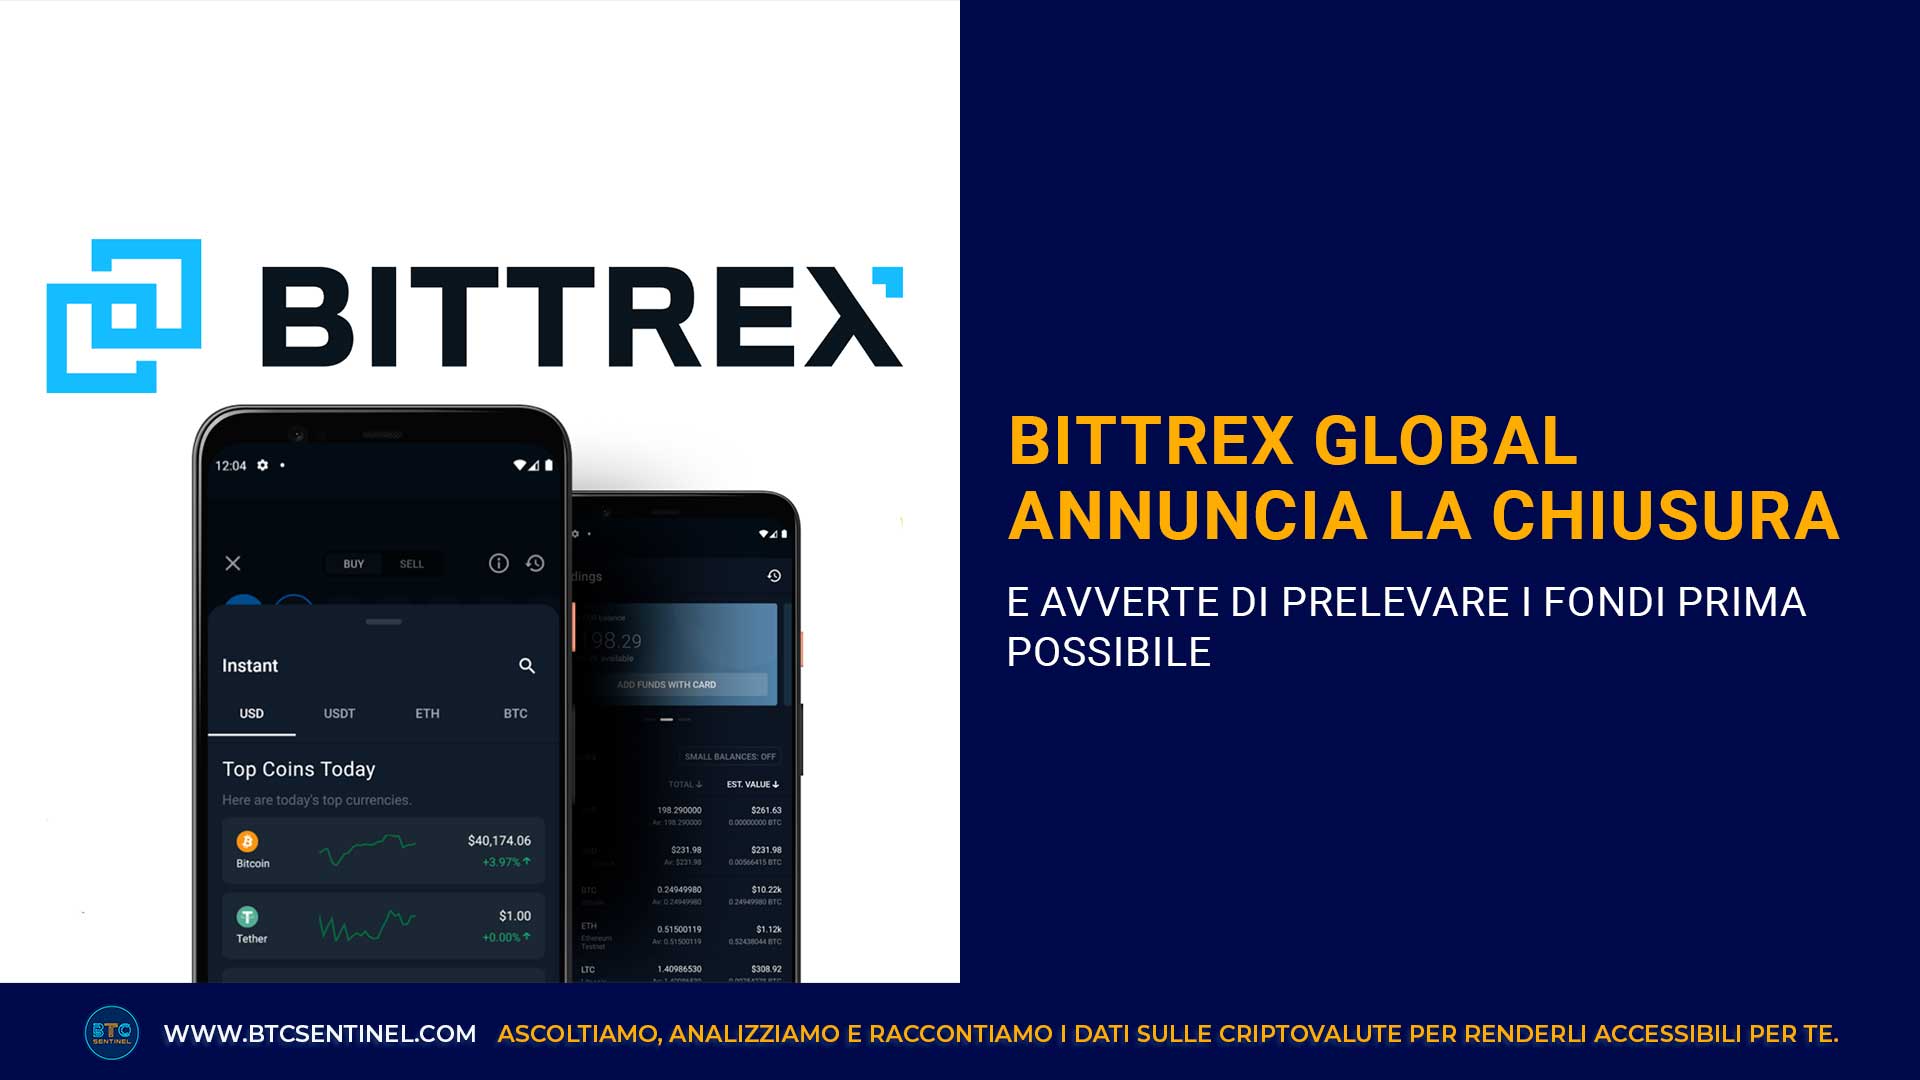 Bittrex Global annuncia la chiusura e avverte: prelevare i propri fondi